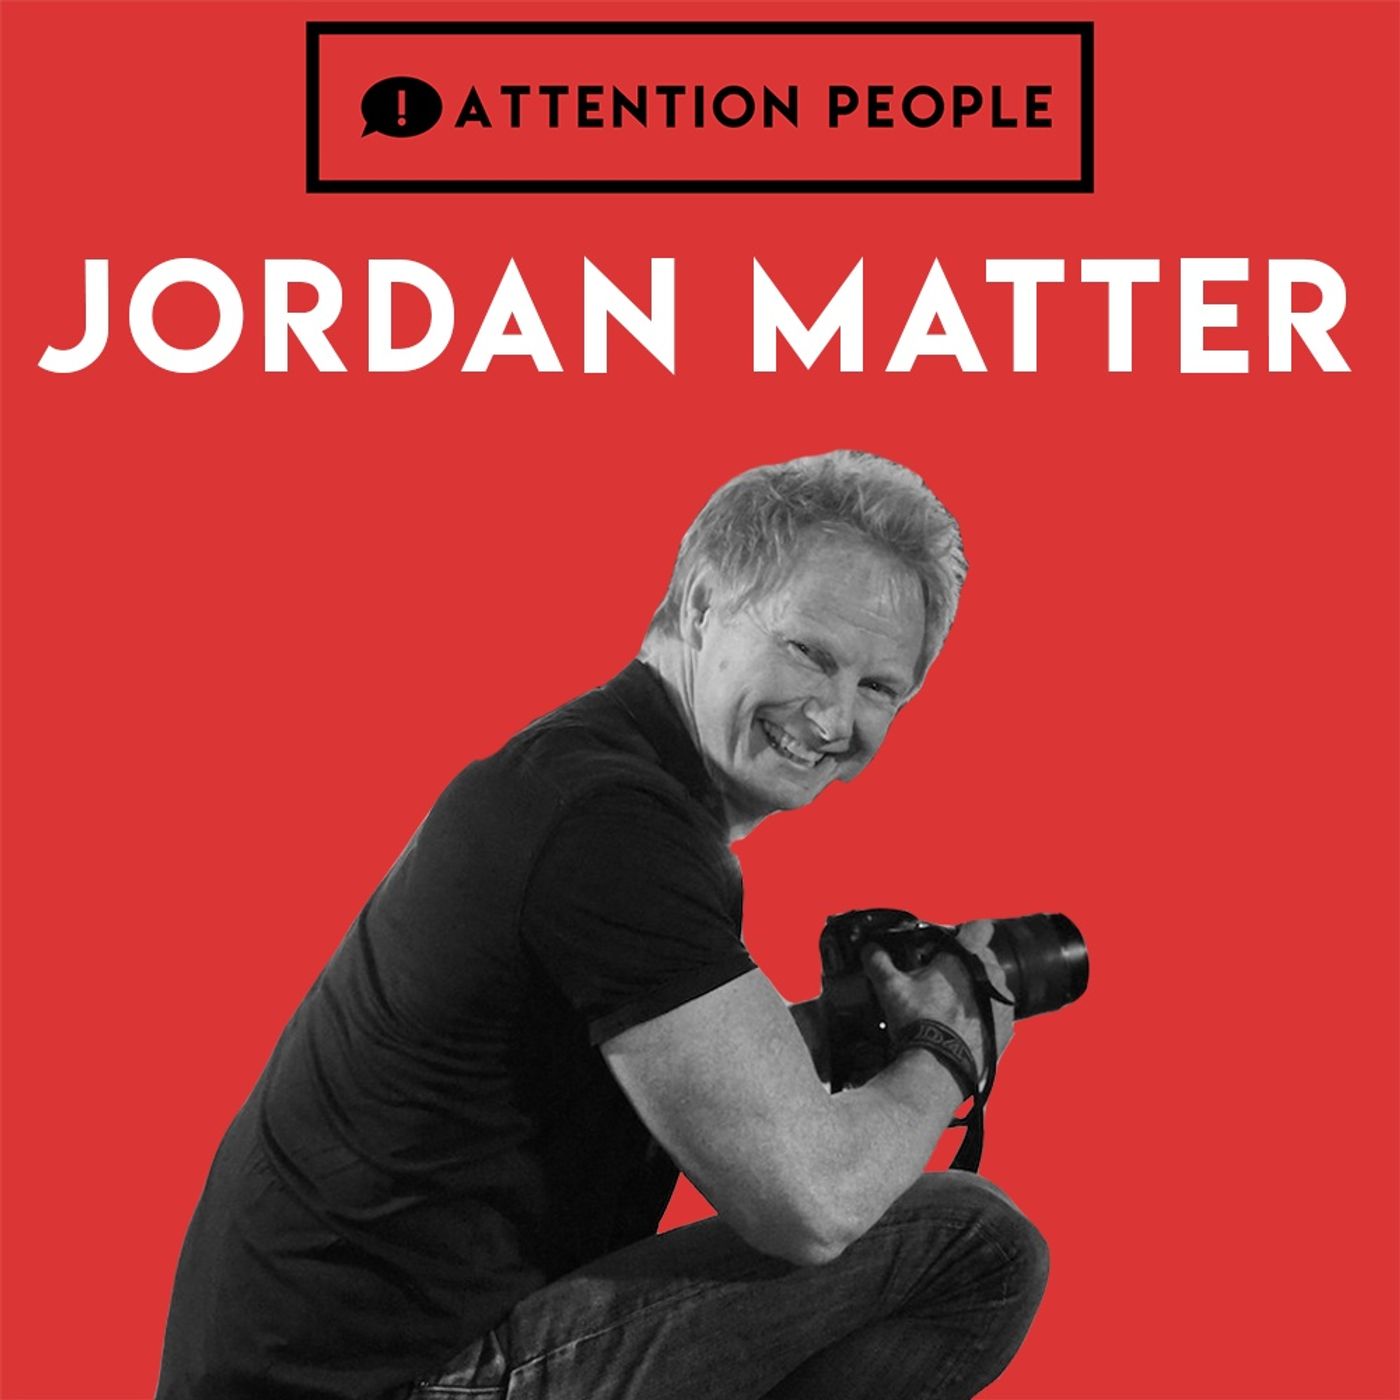 Jordan Matter - Spontaneous Creativity & 10 Minute Photo Challenge